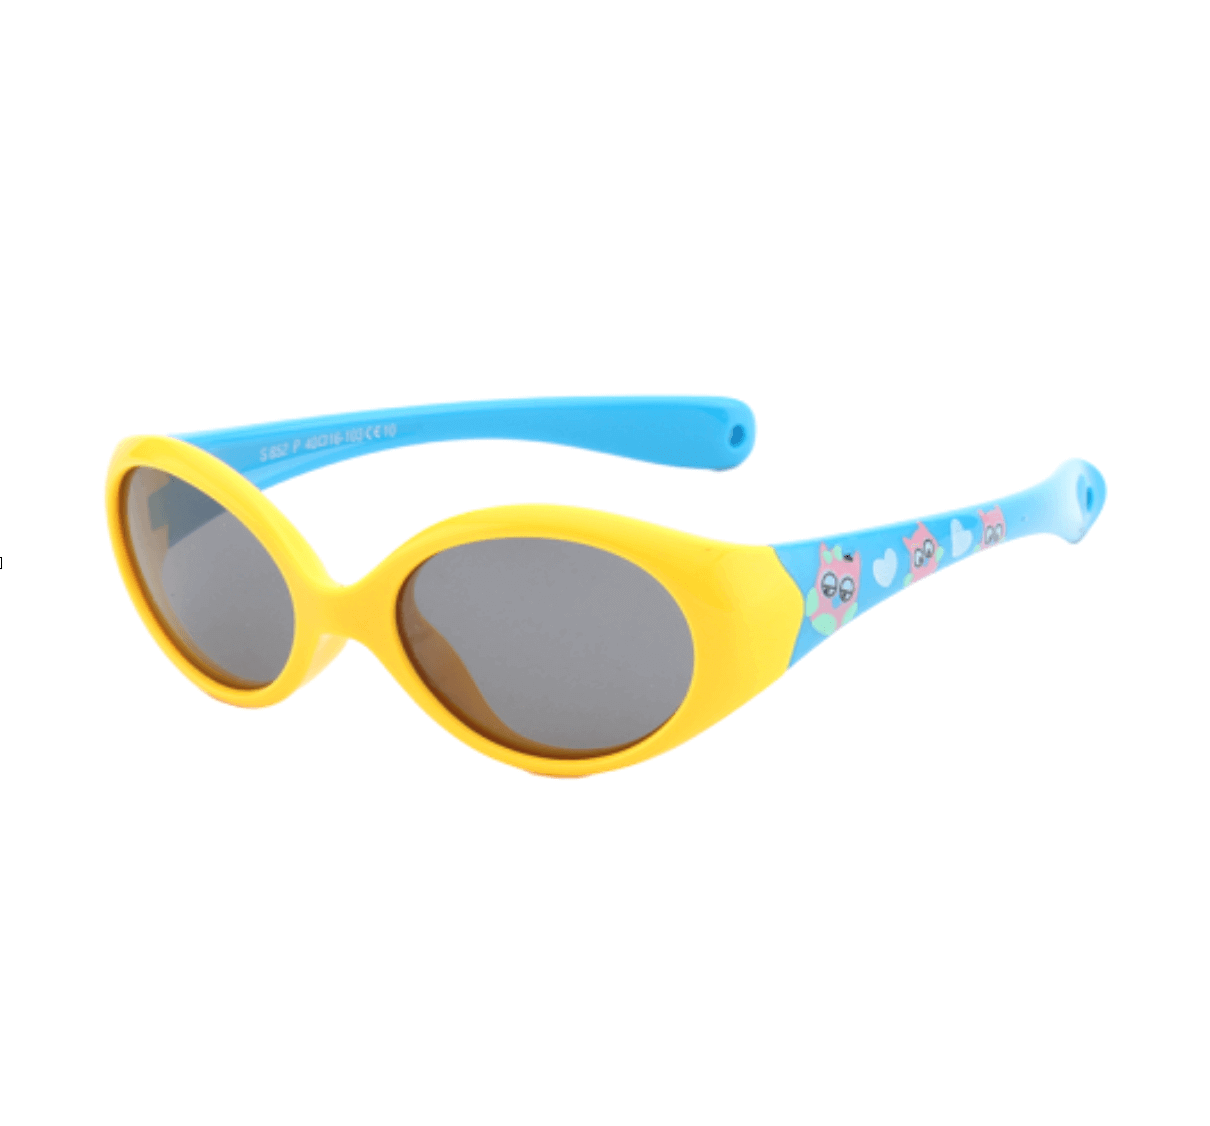 wholesale plastic sunglasses, wholesale kids sunglasses, plastic sunglasses in bulk, plastic sunglasses manufacturers, wholesale sunglasses manufacturer